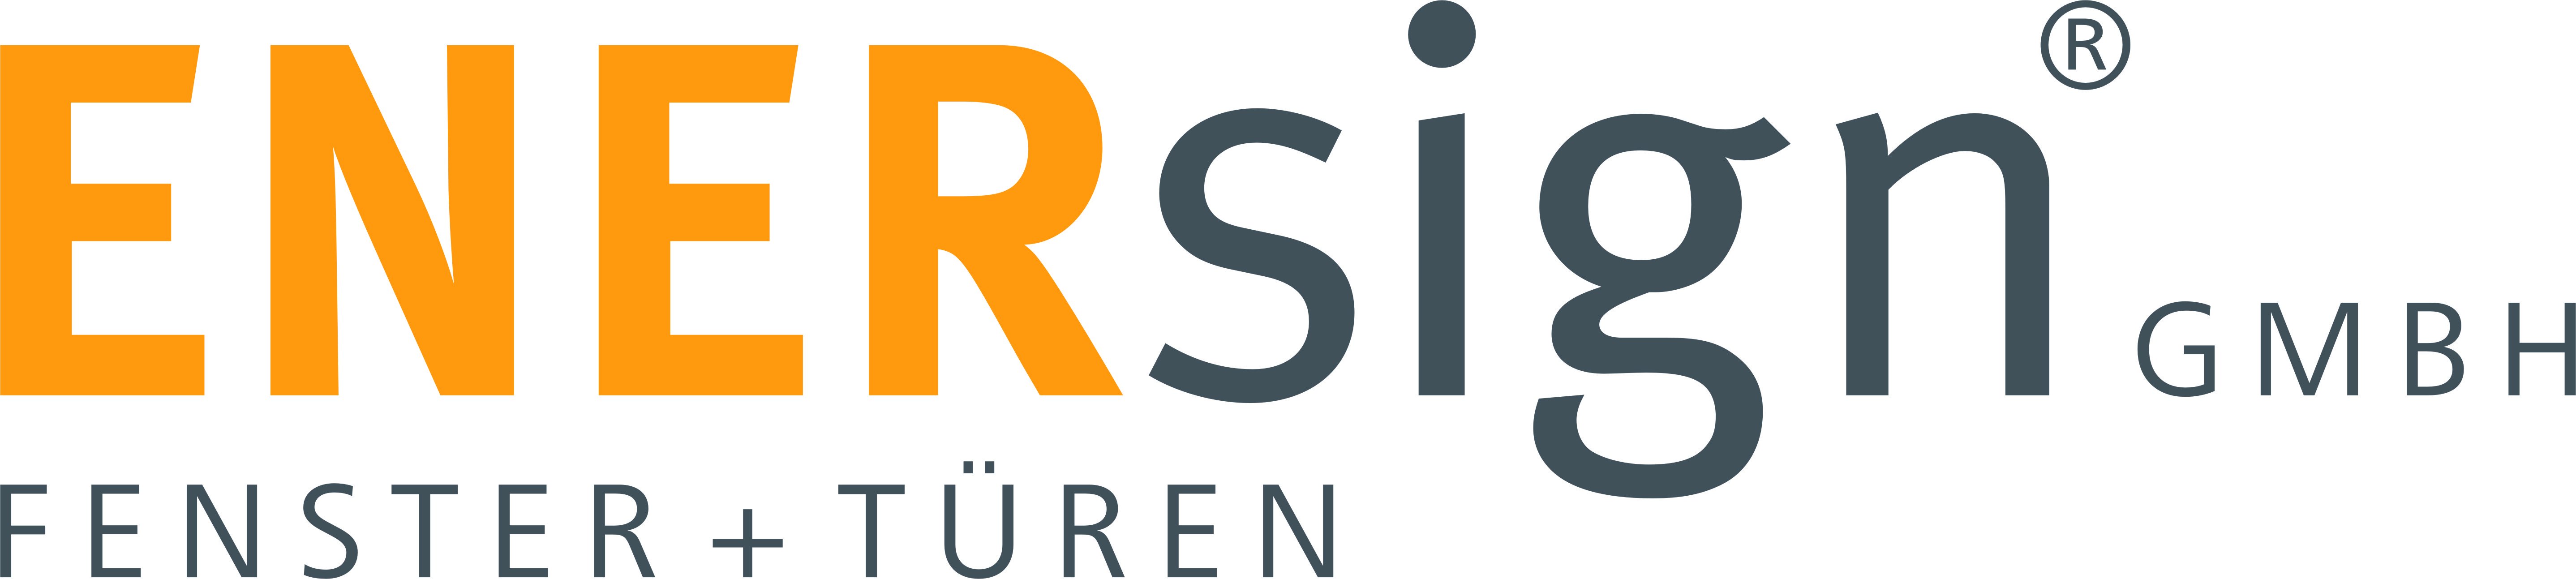 ENERsign logo